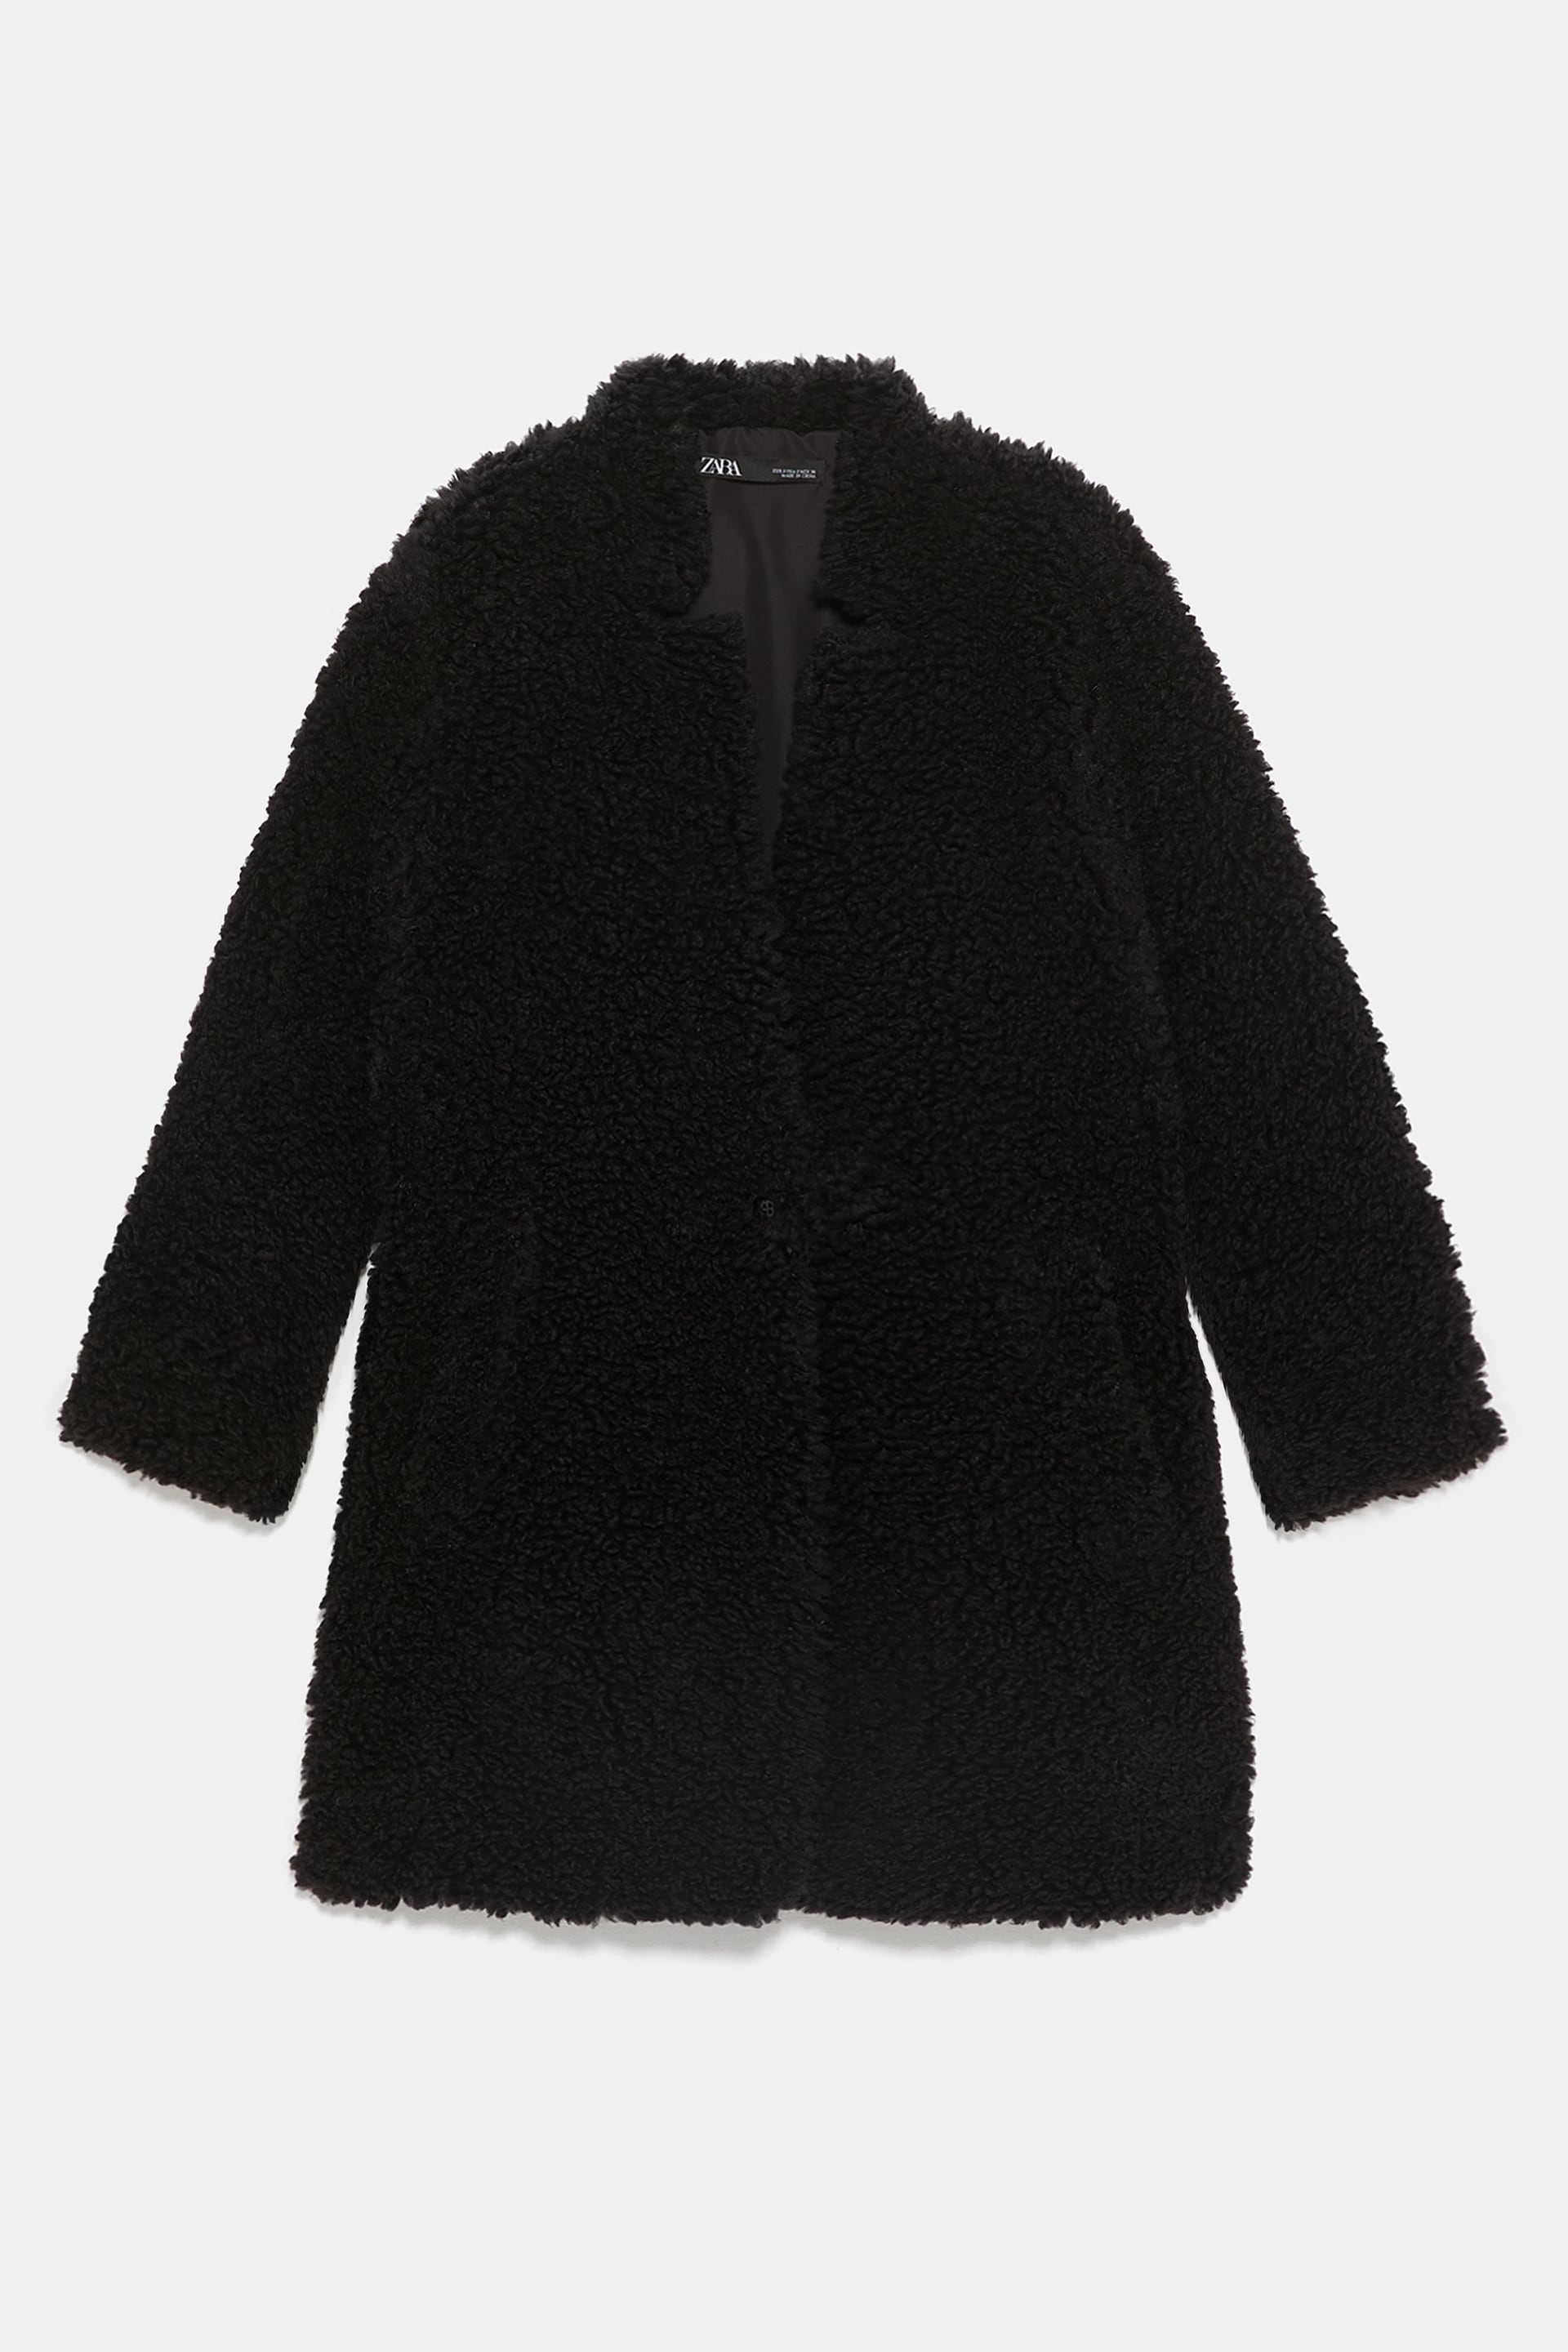 Zara FAUX SHEARLING COAT at £49.99 | love the brands